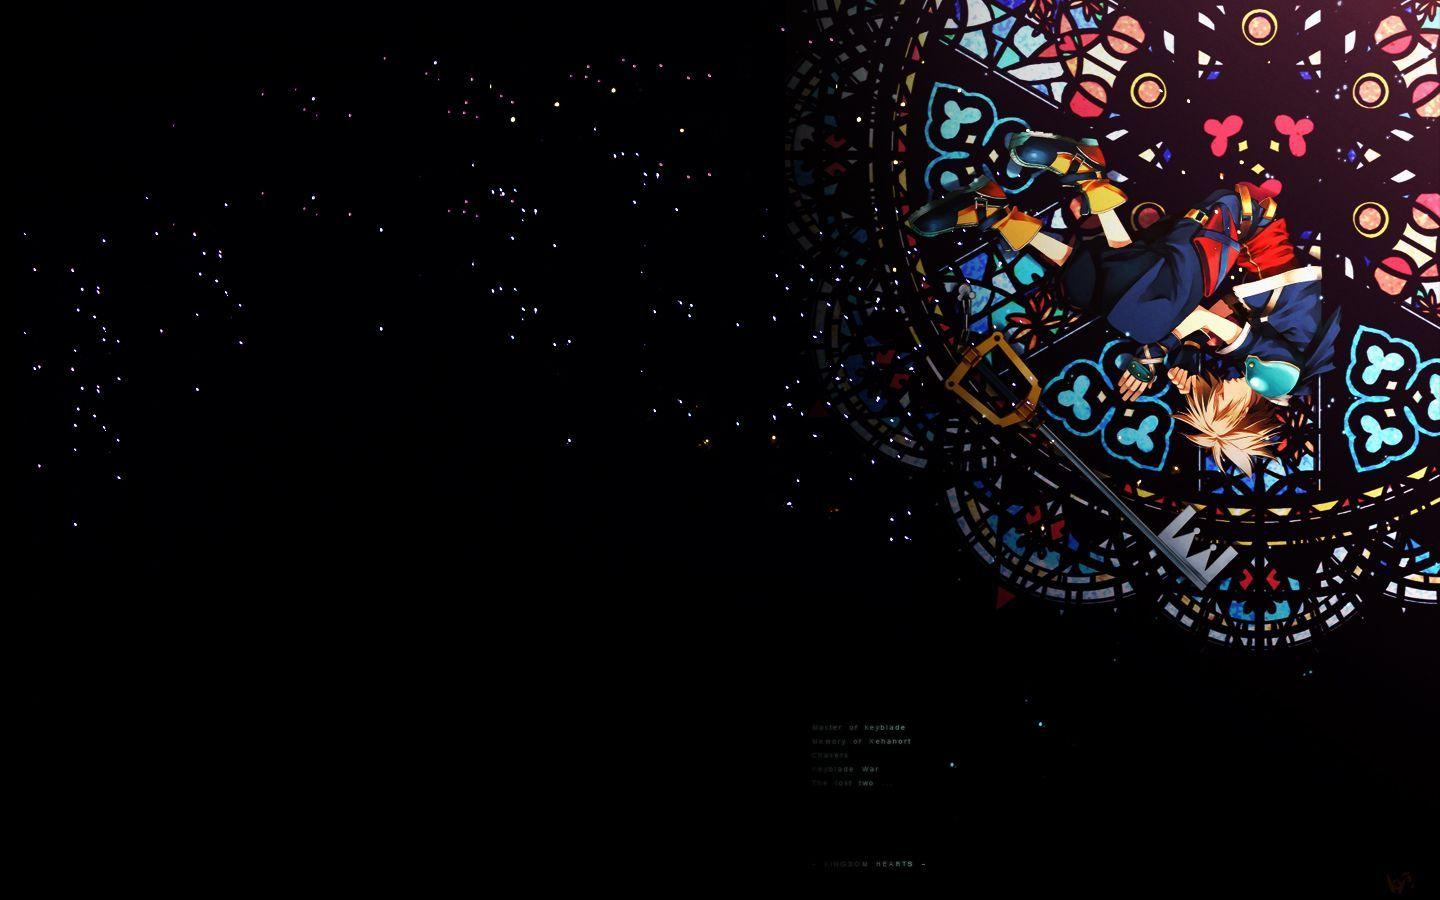 Kingdom Hearts Desktop Wallpapers Top Free Kingdom Hearts Desktop Backgrounds Wallpaperaccess